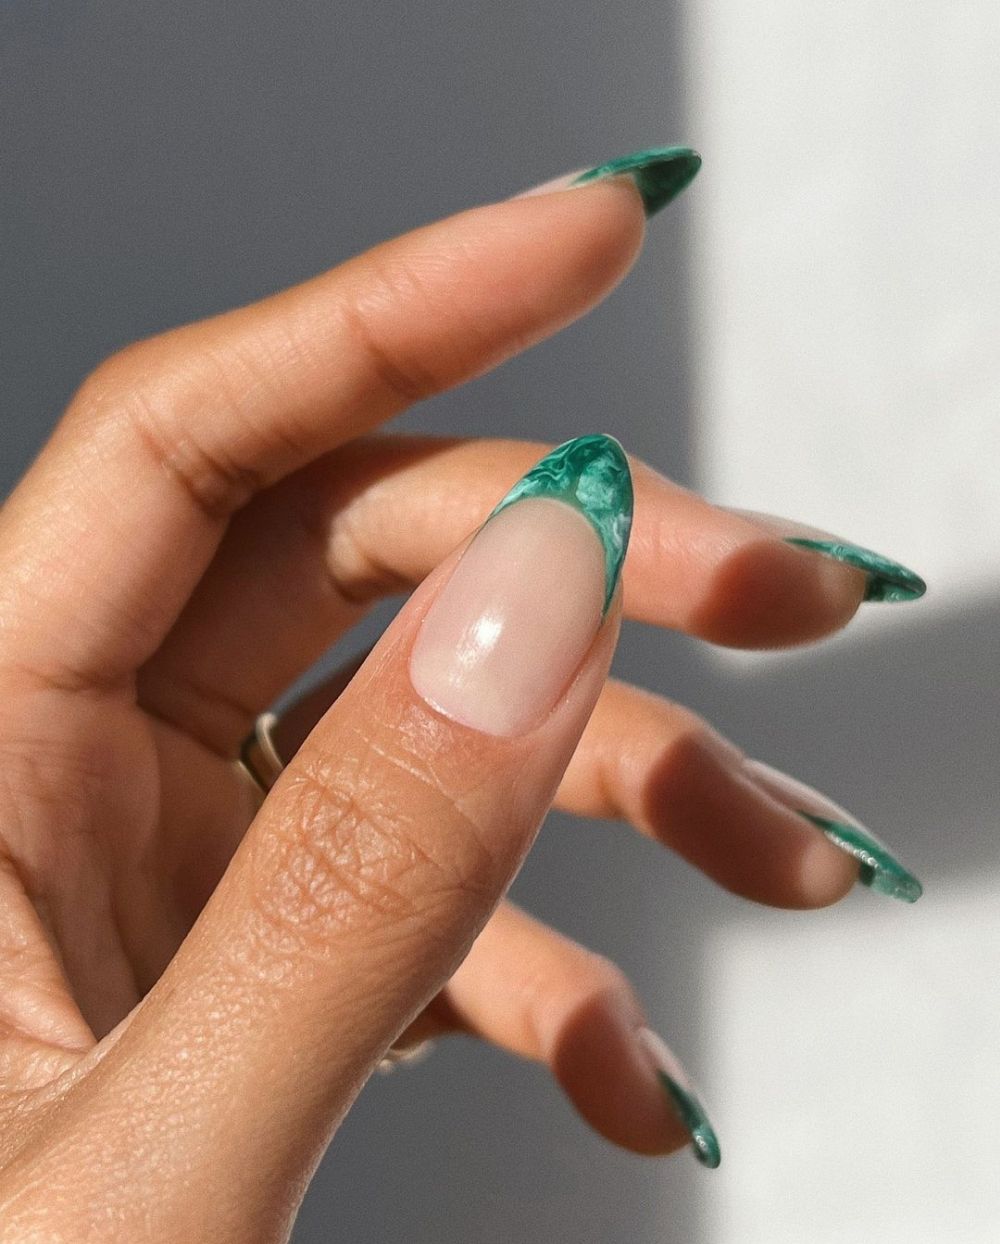 Marbled green nail ideas